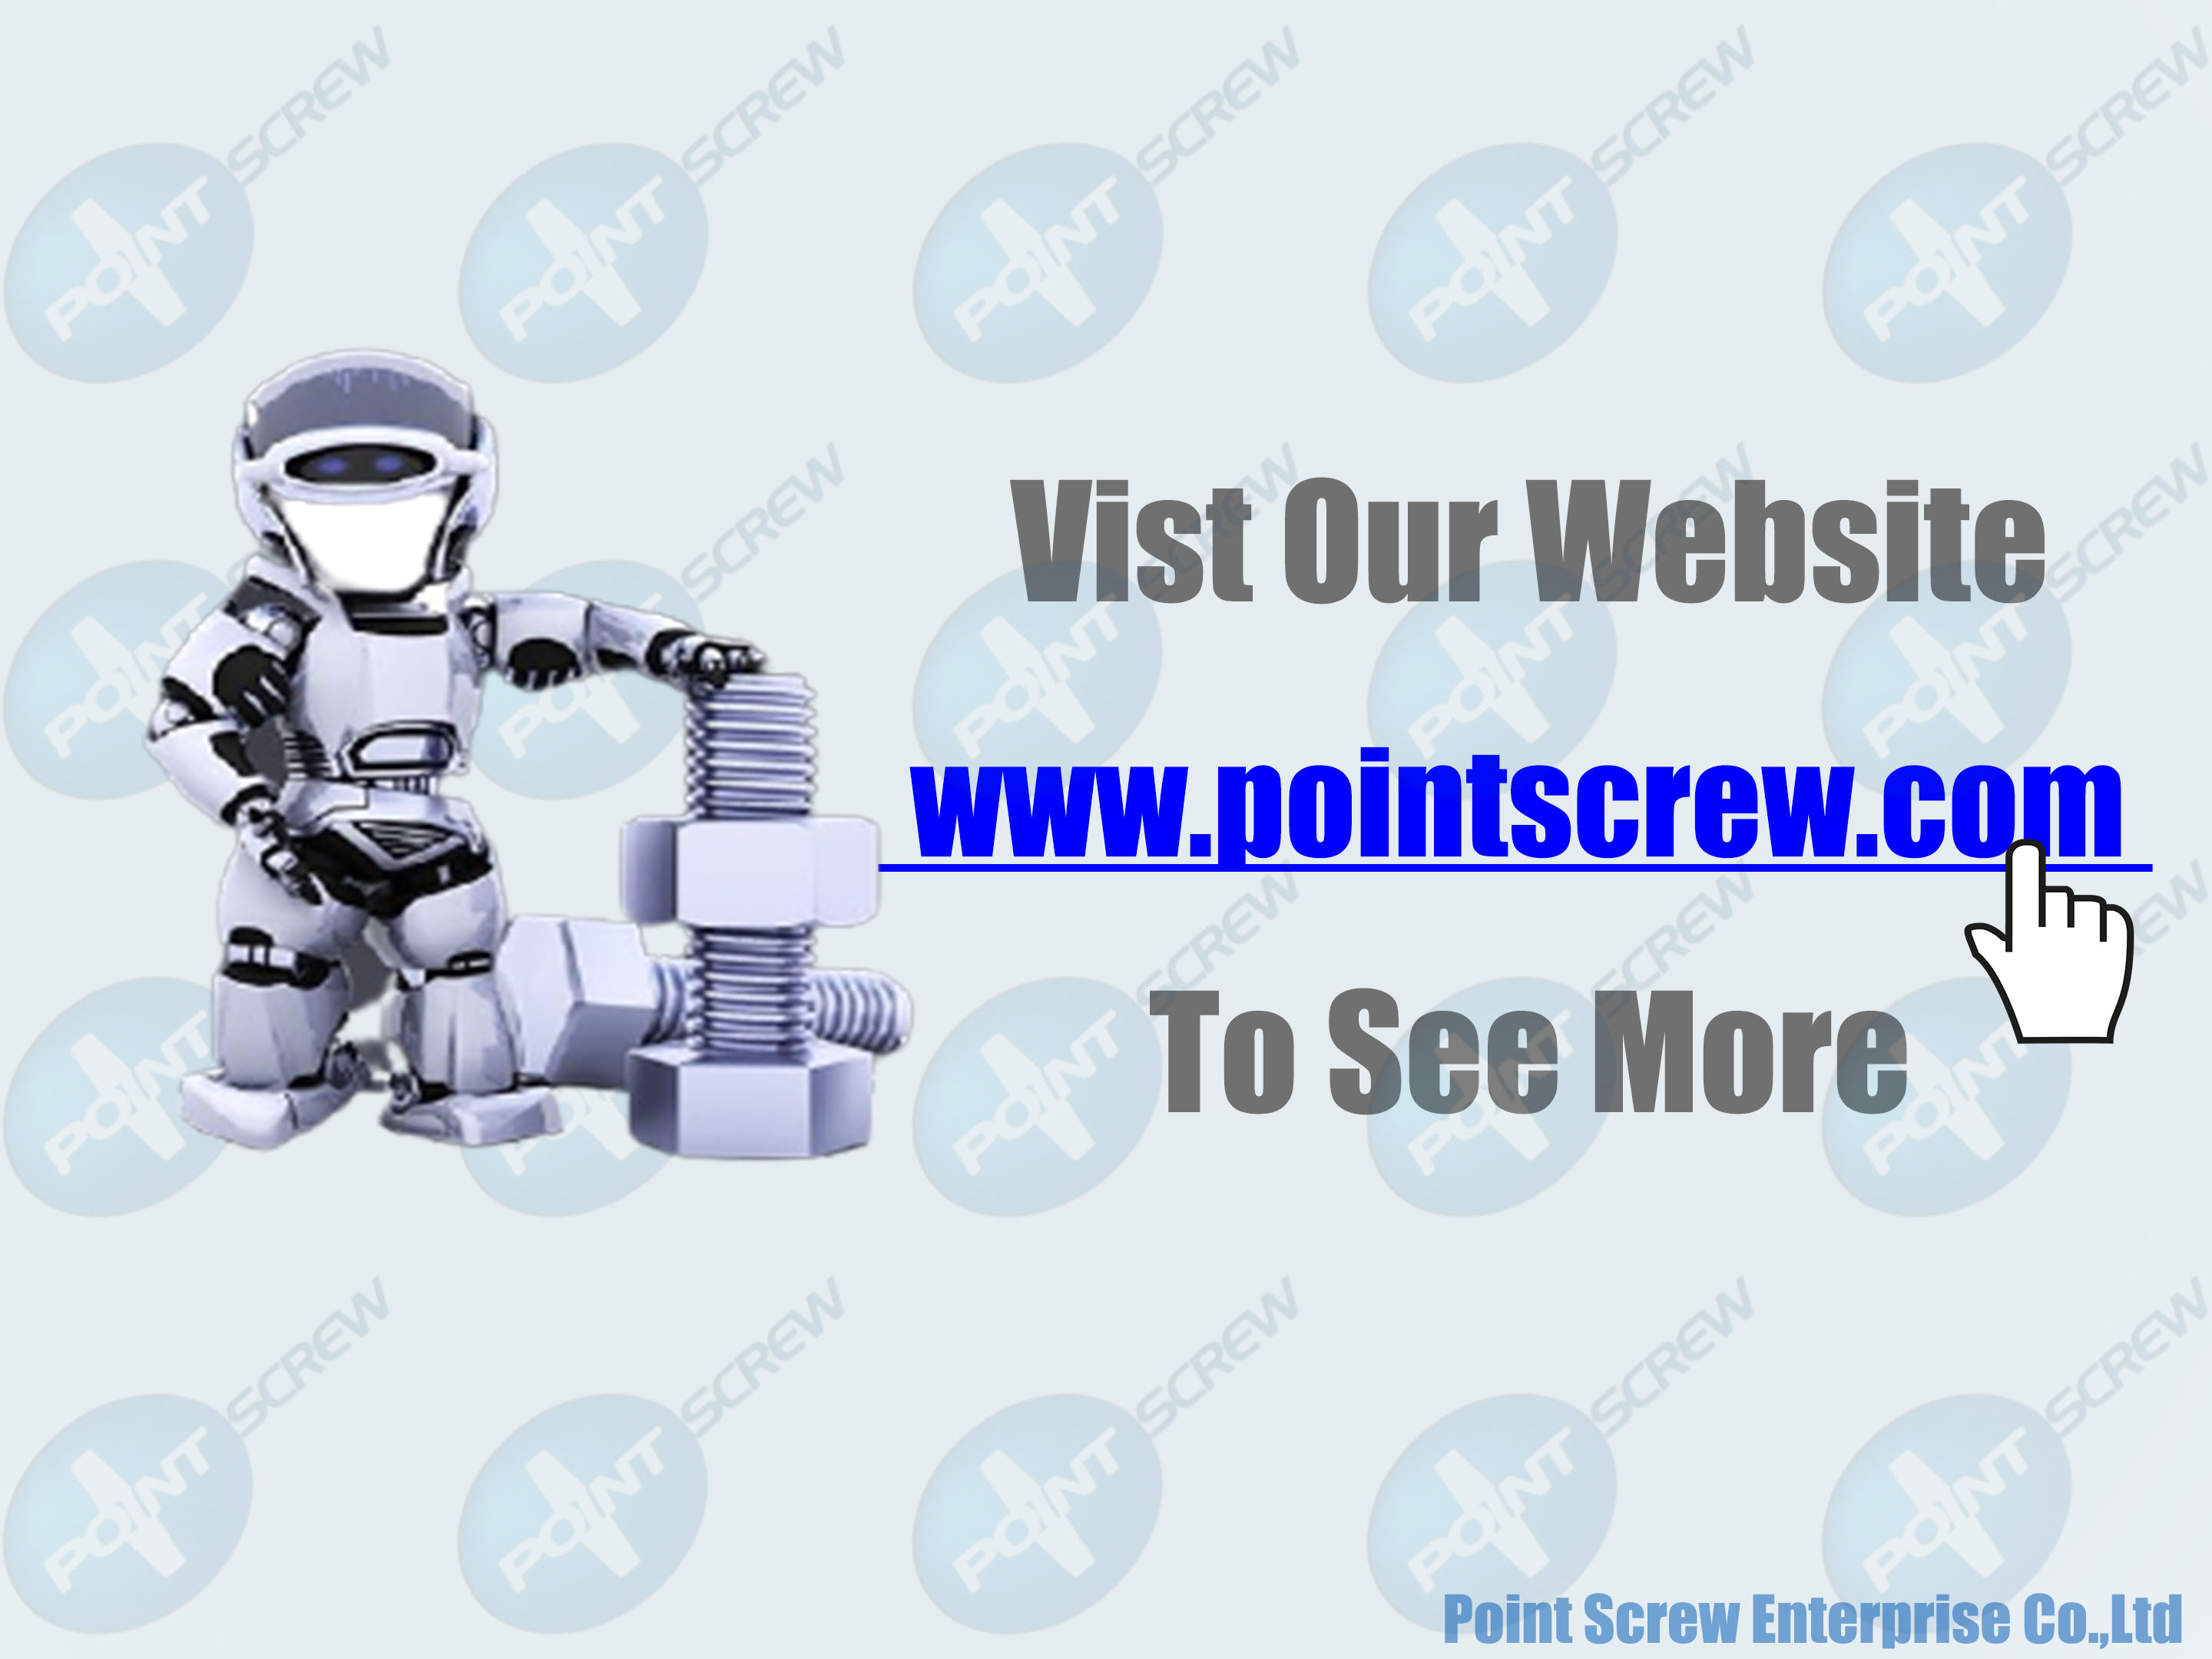 POINT SCREW ENTERPRISE CO., LTD. , www.pointscrew.com